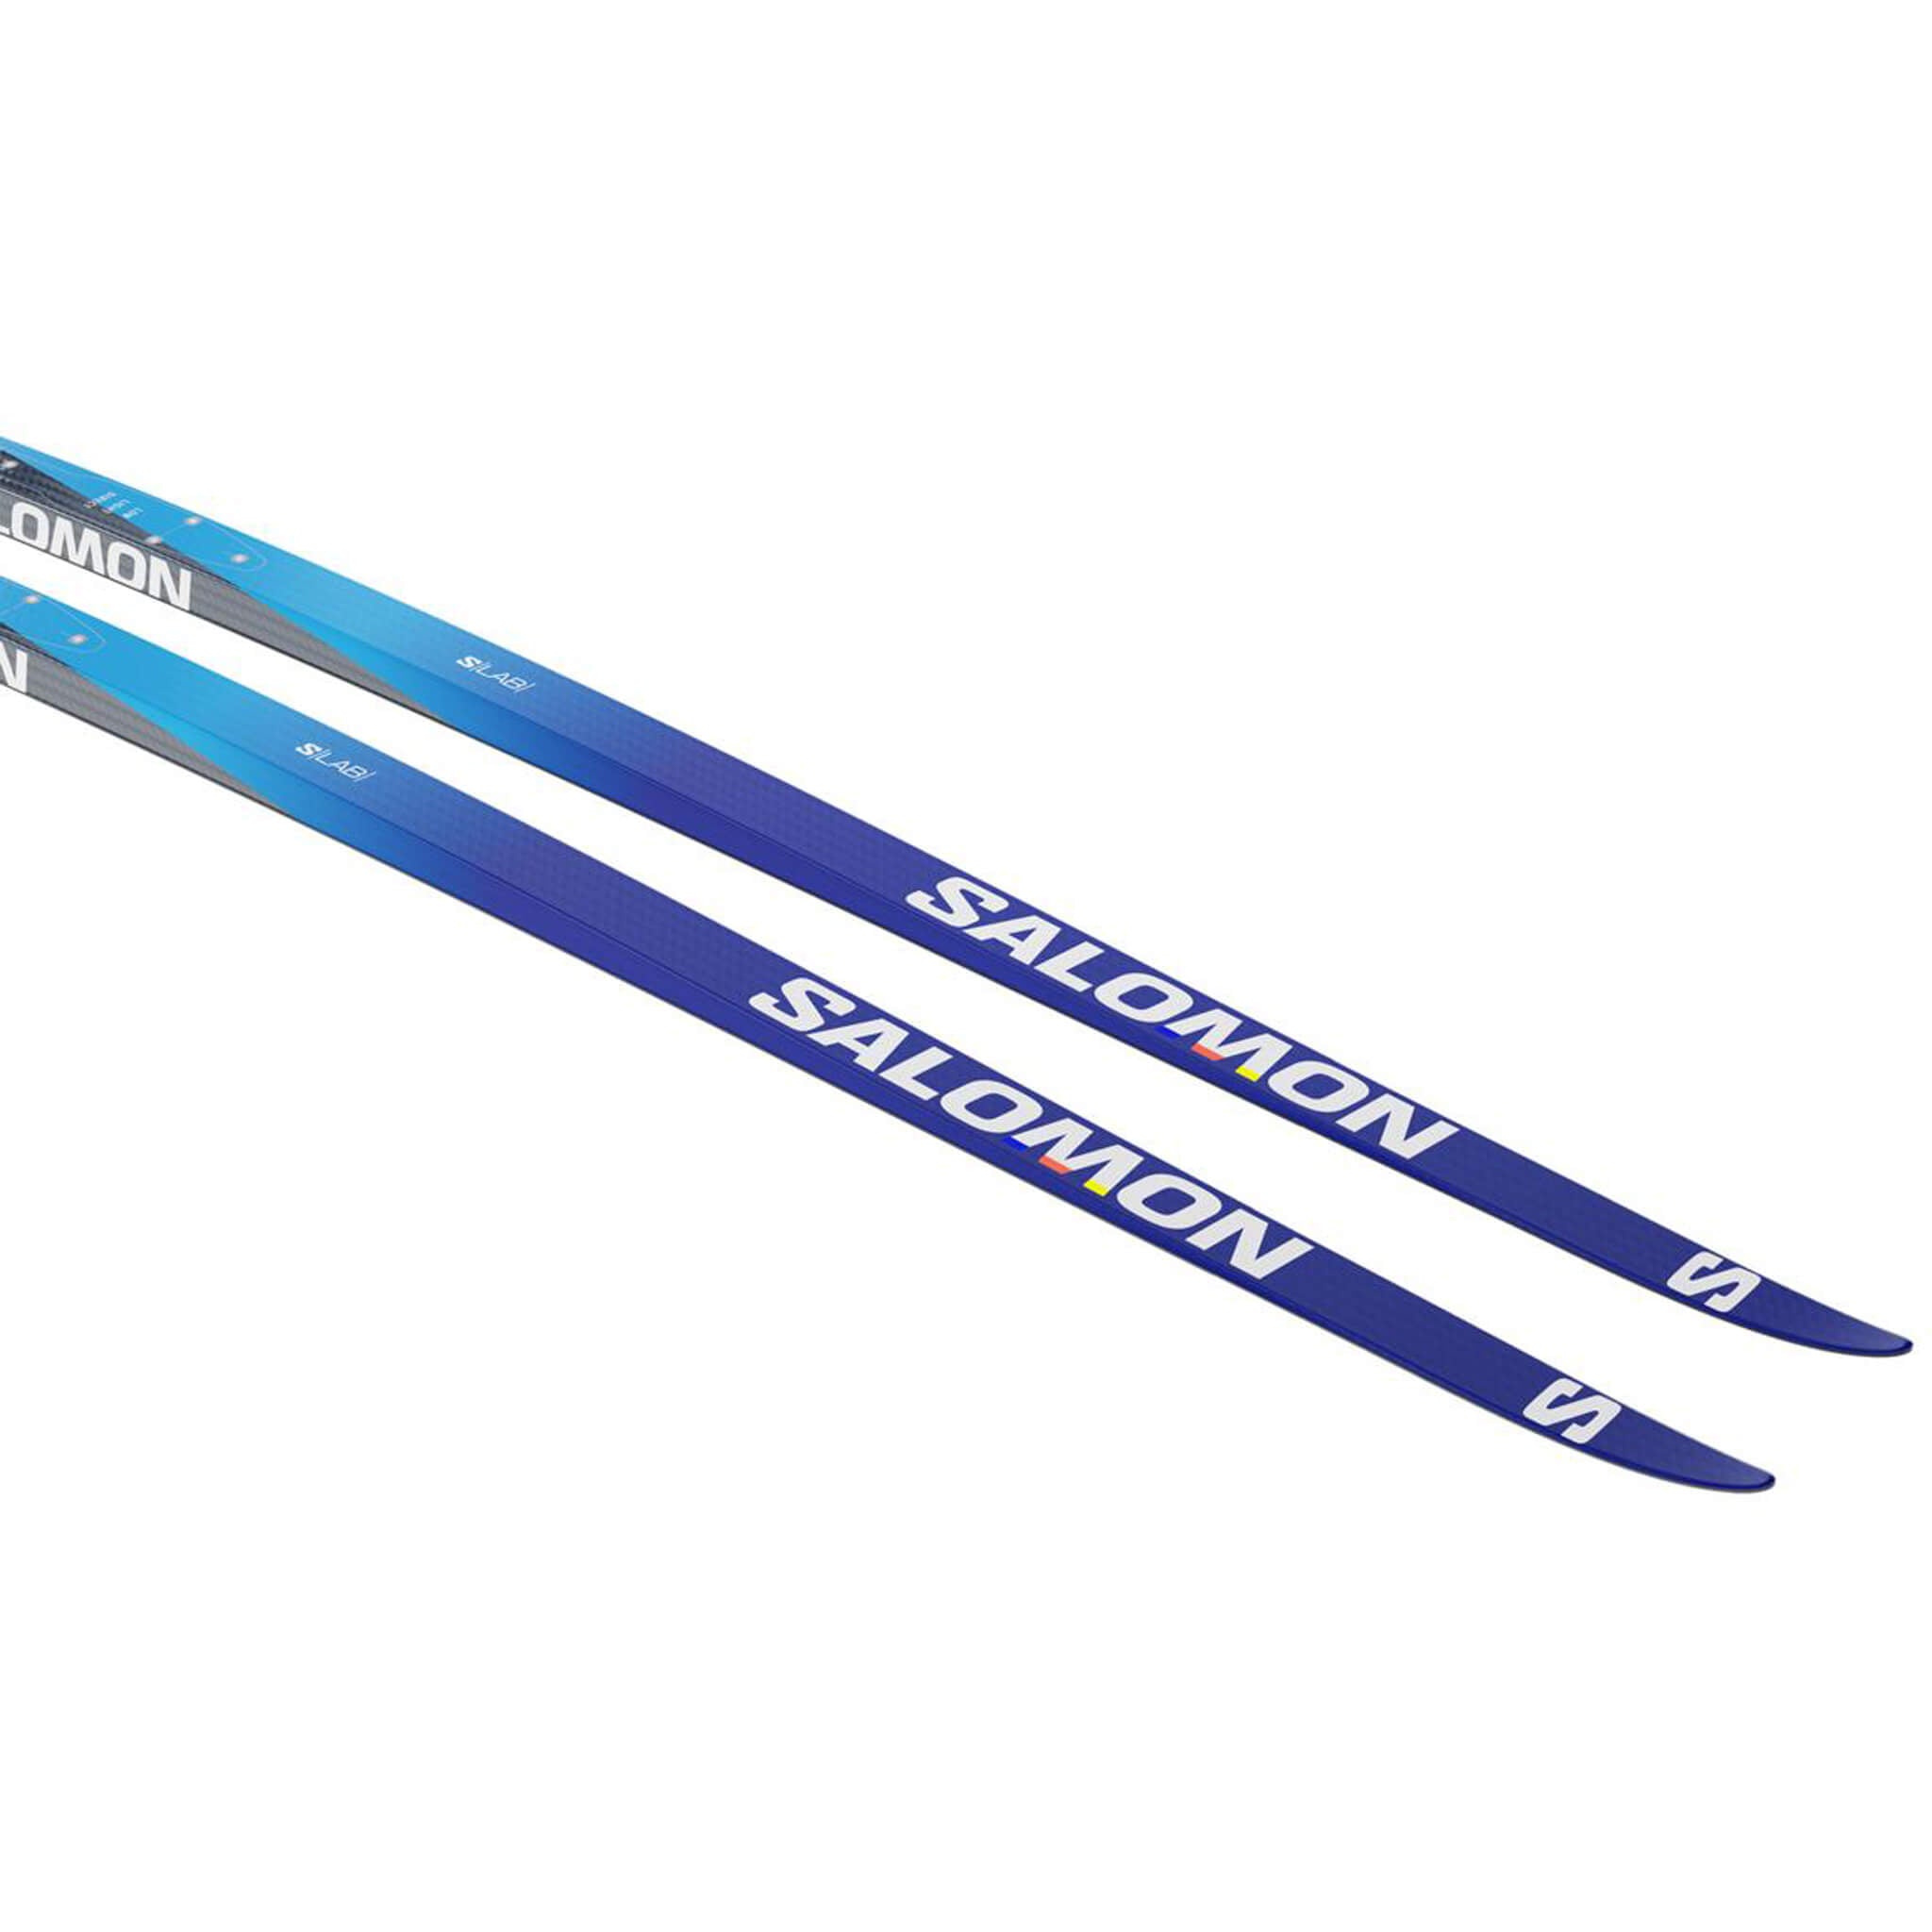 Salomon S/lab Carbon Skate Ski 192 Extra Stiff Universal